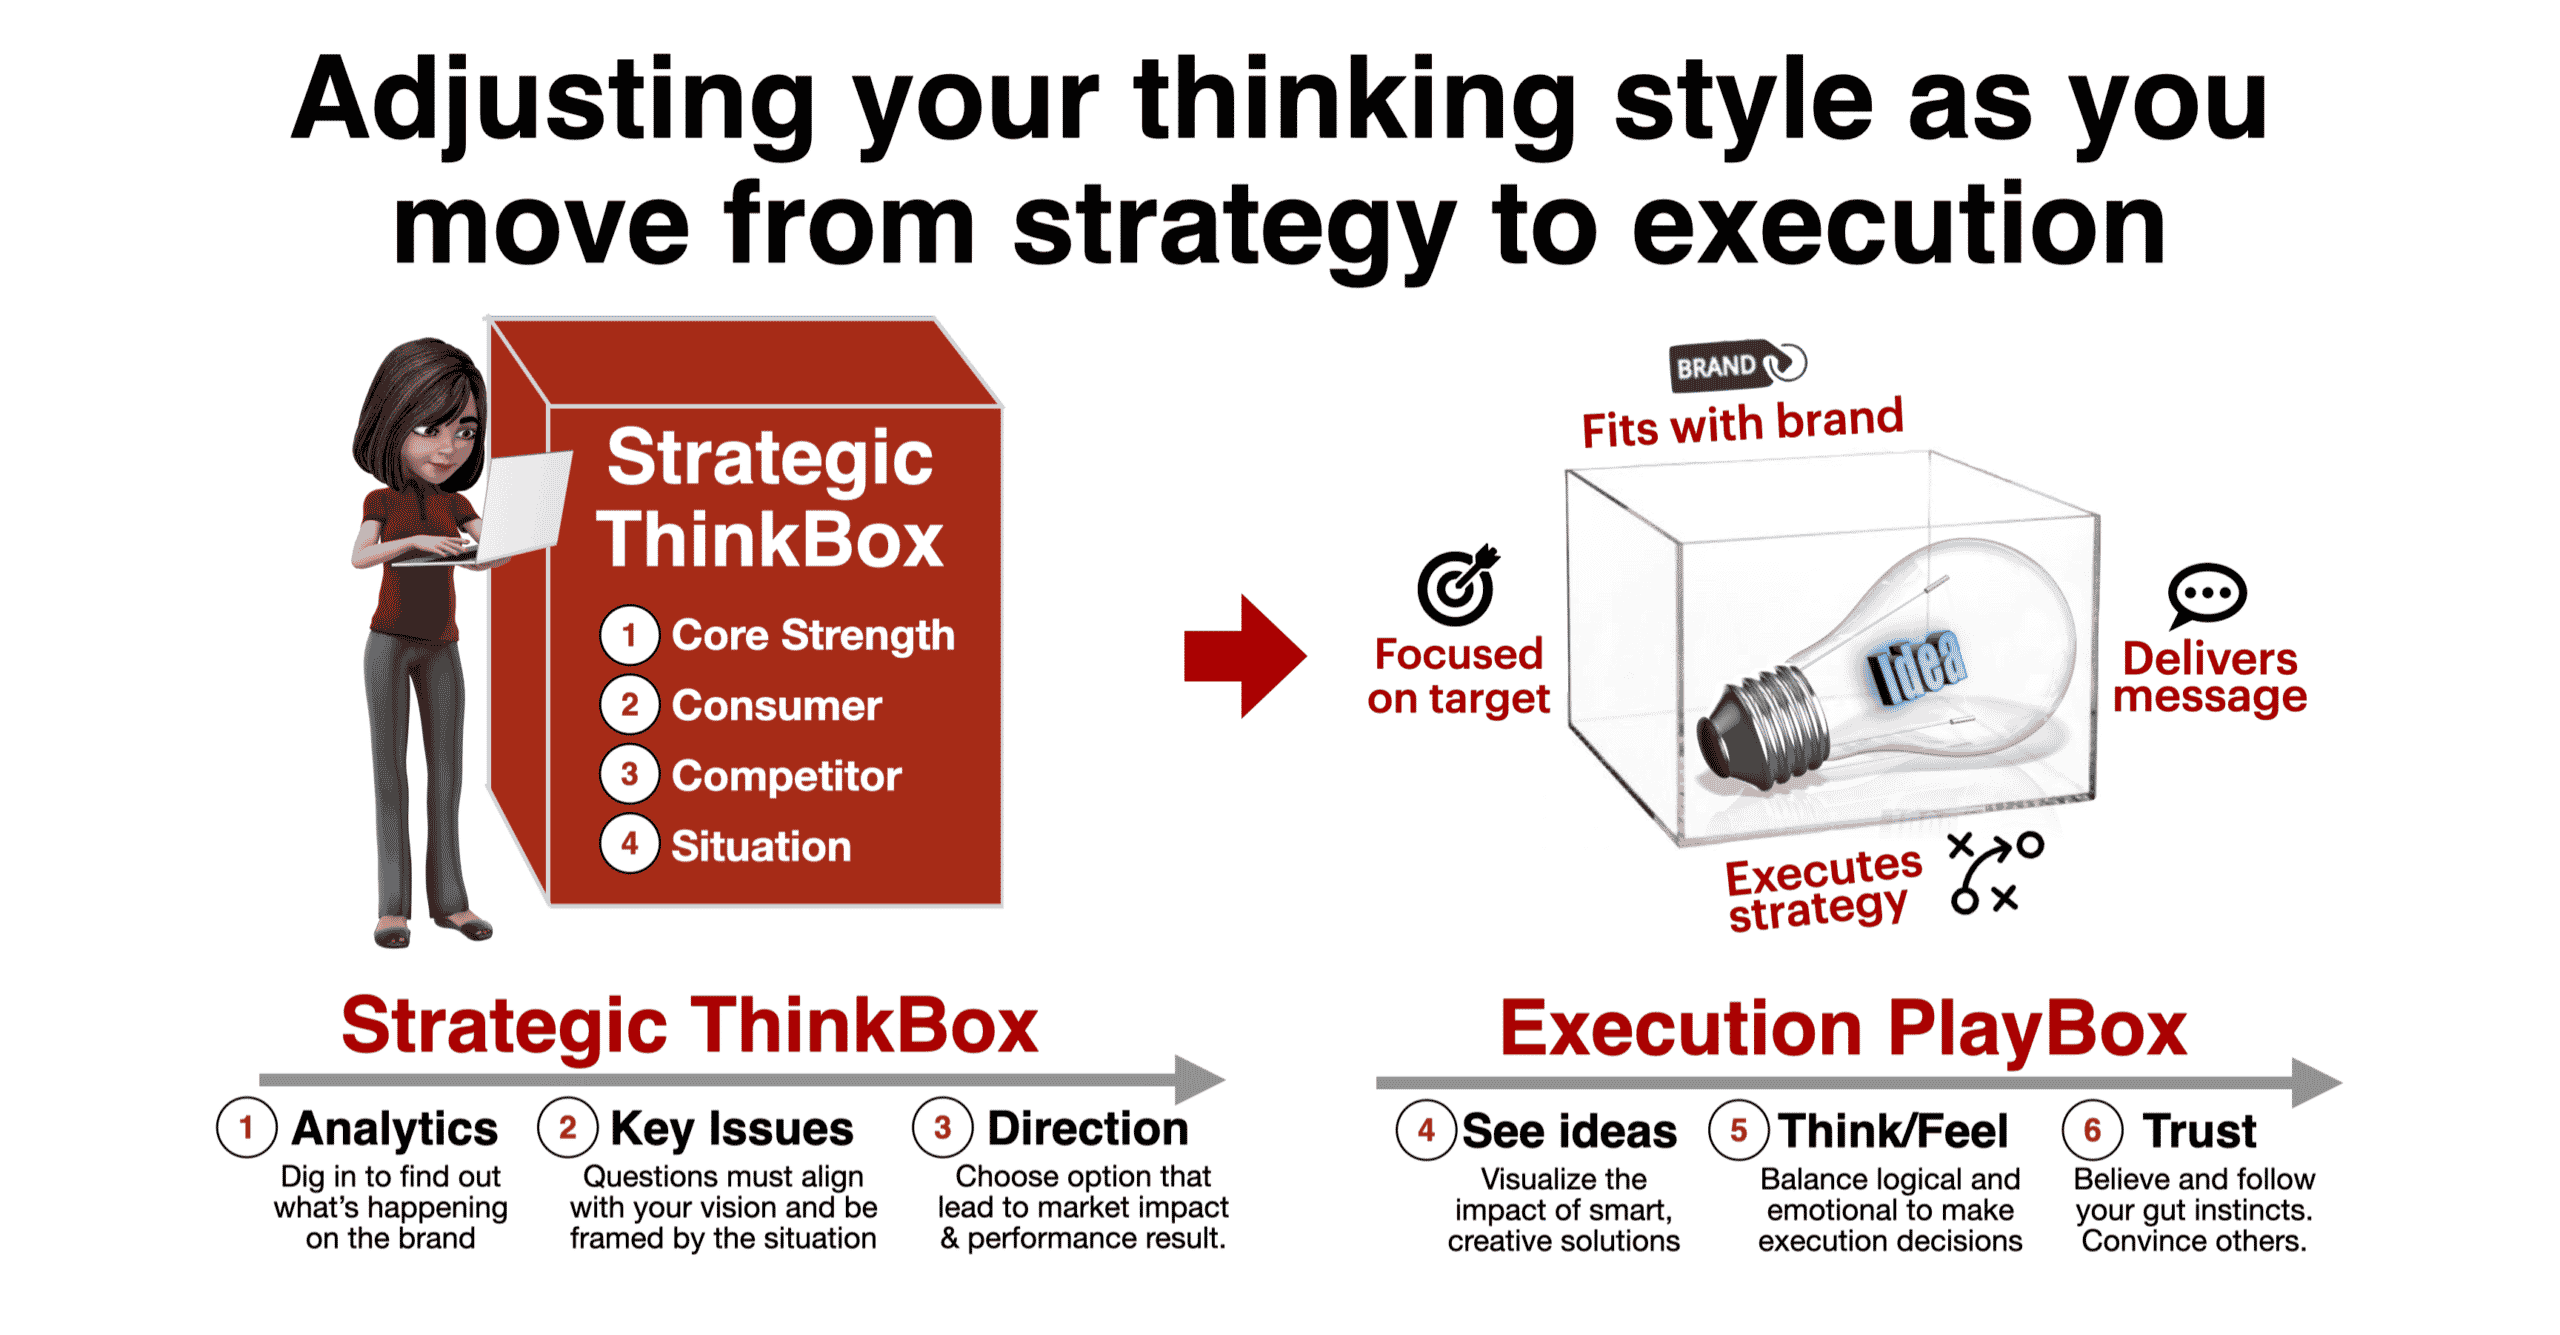 Strategic ThinkBox and Execution PlayBox